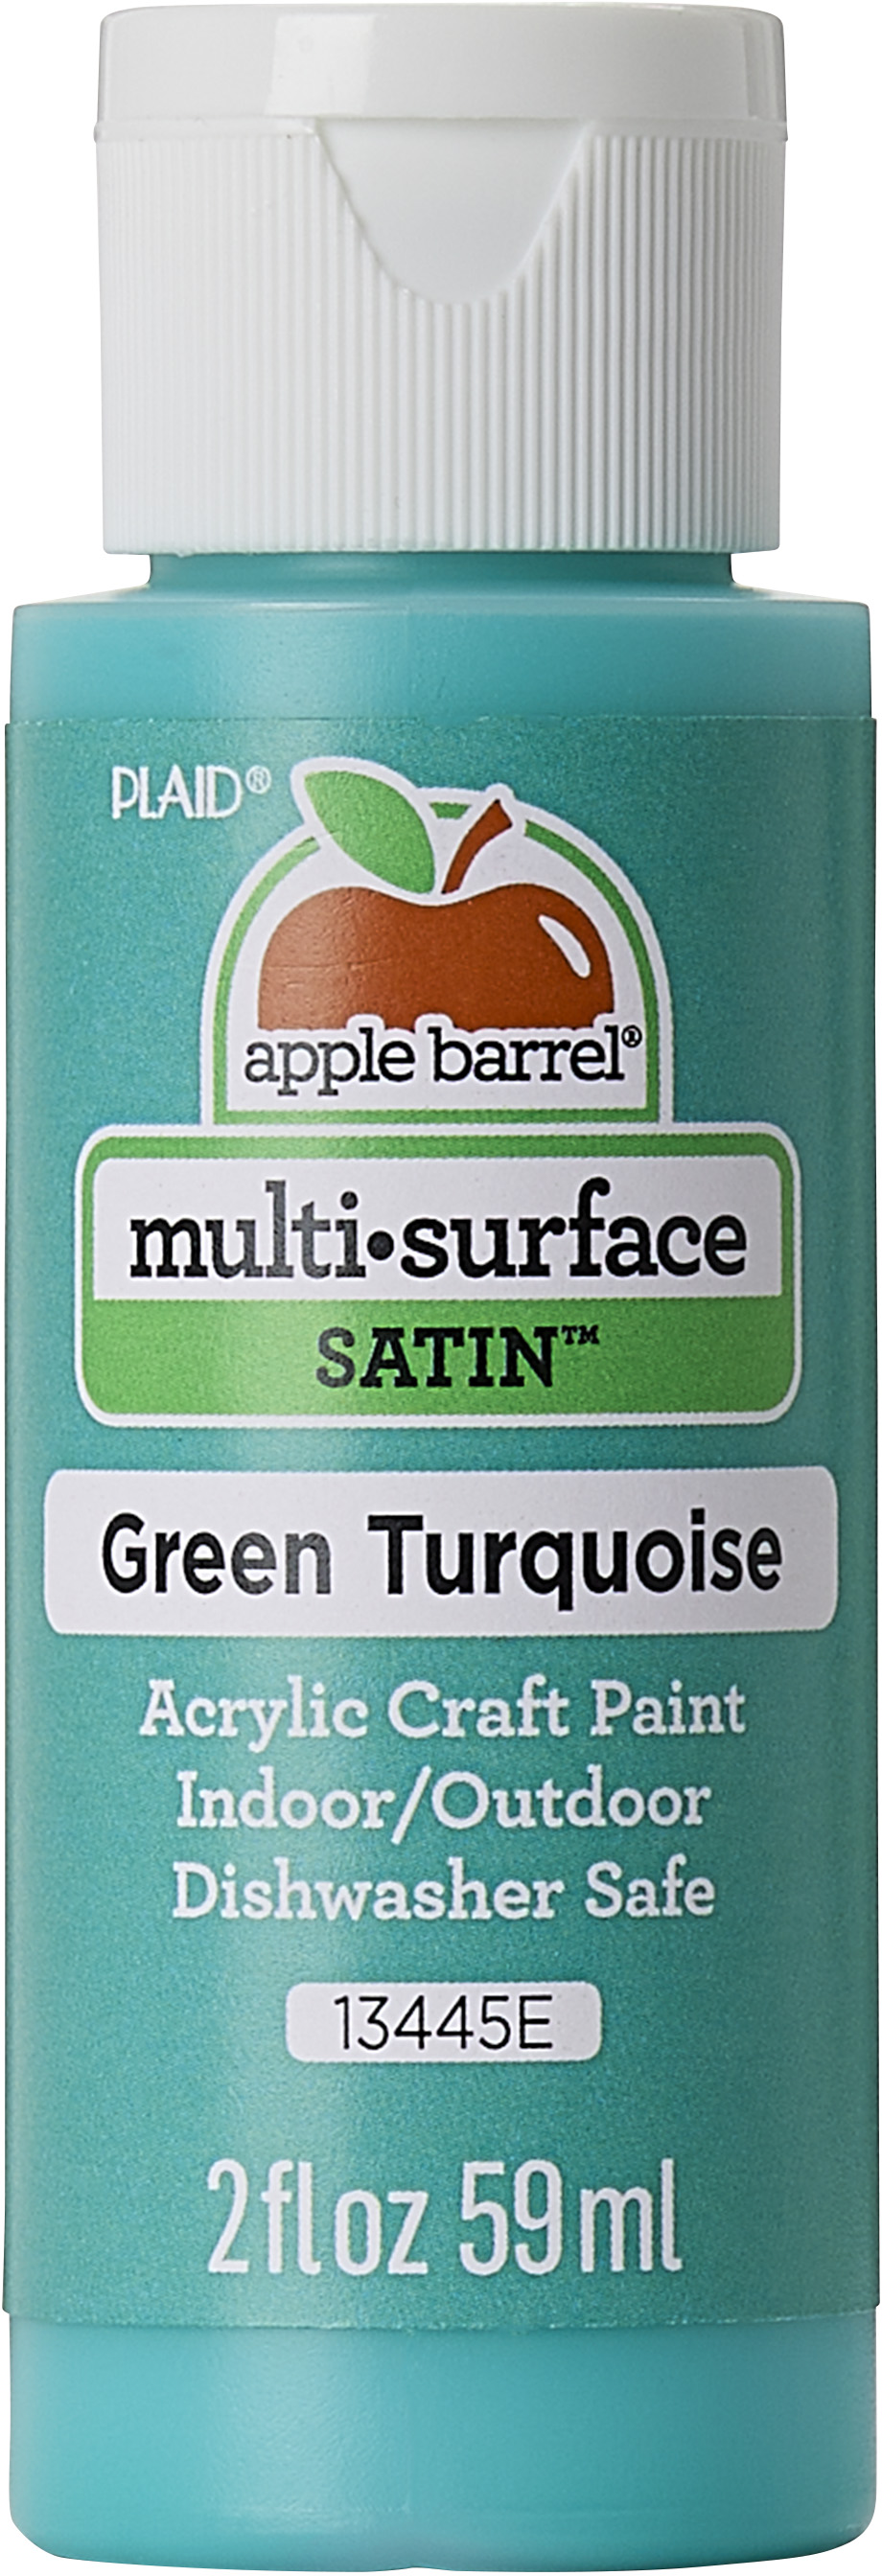 Apple Barrel Multi-Surface Acrylic Craft Paint, Satin Finish, White, 2 fl oz